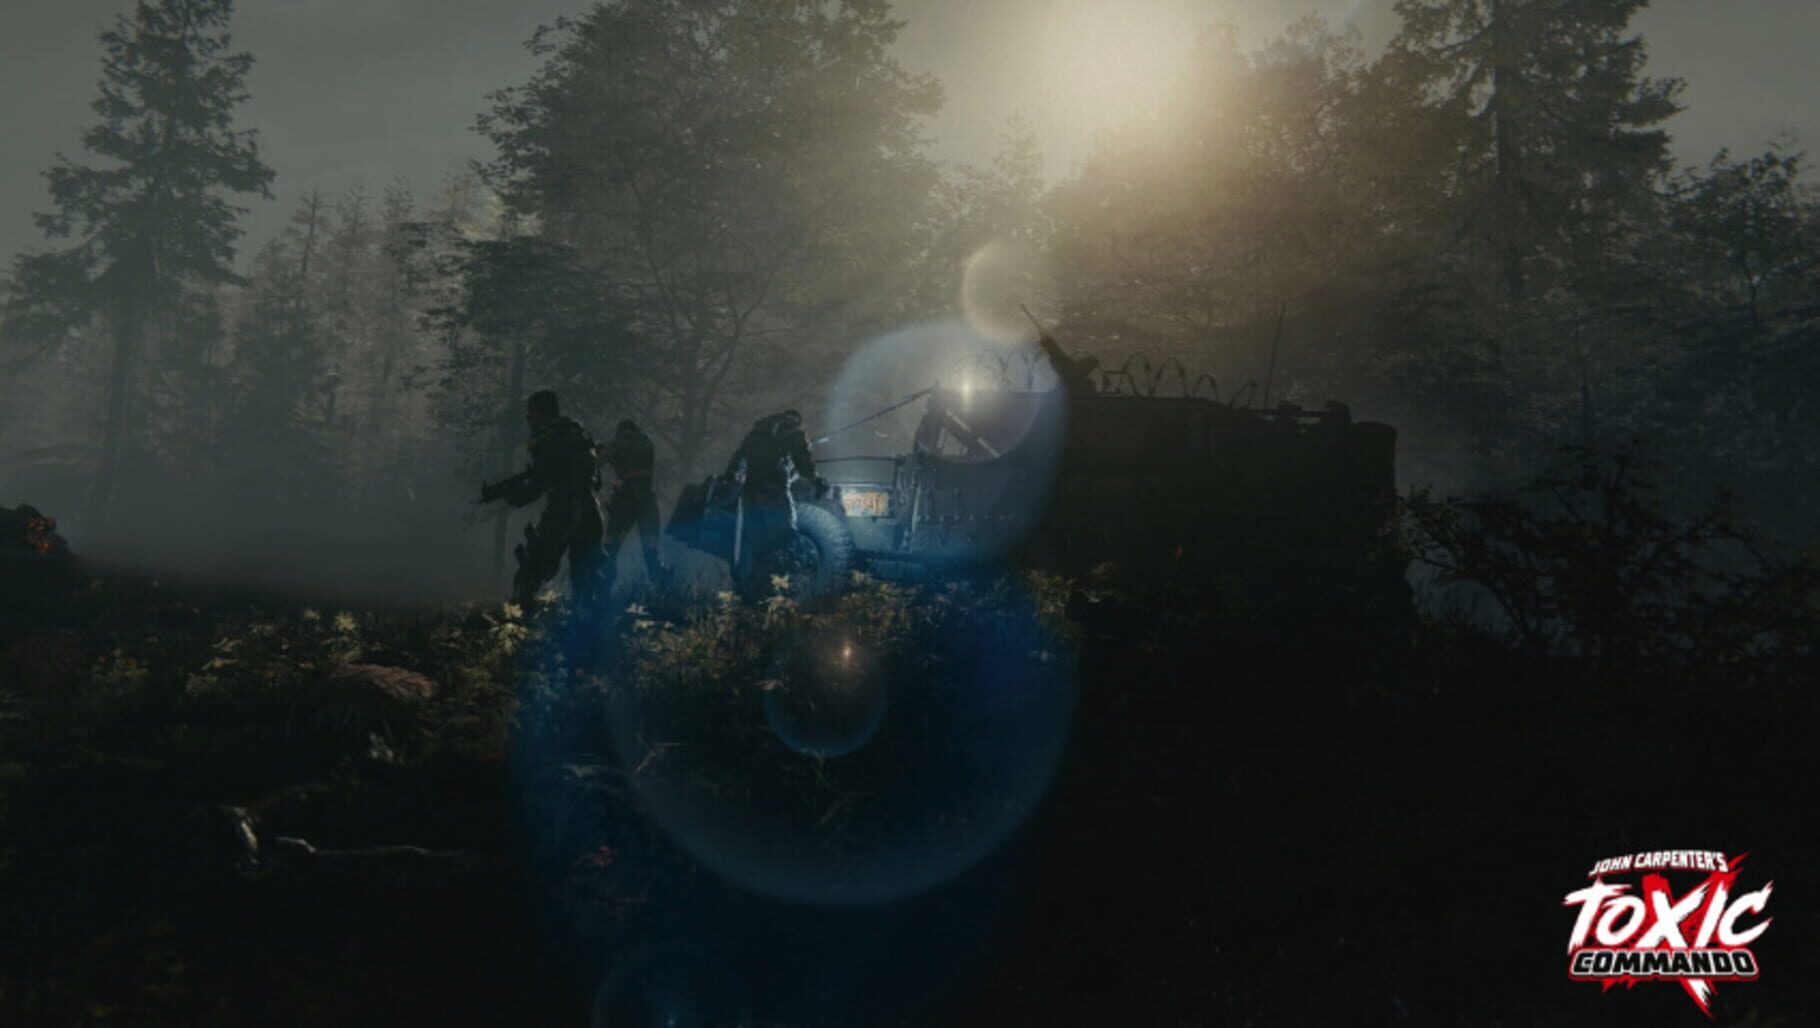 Screenshot for John Carpenter's Toxic Commando